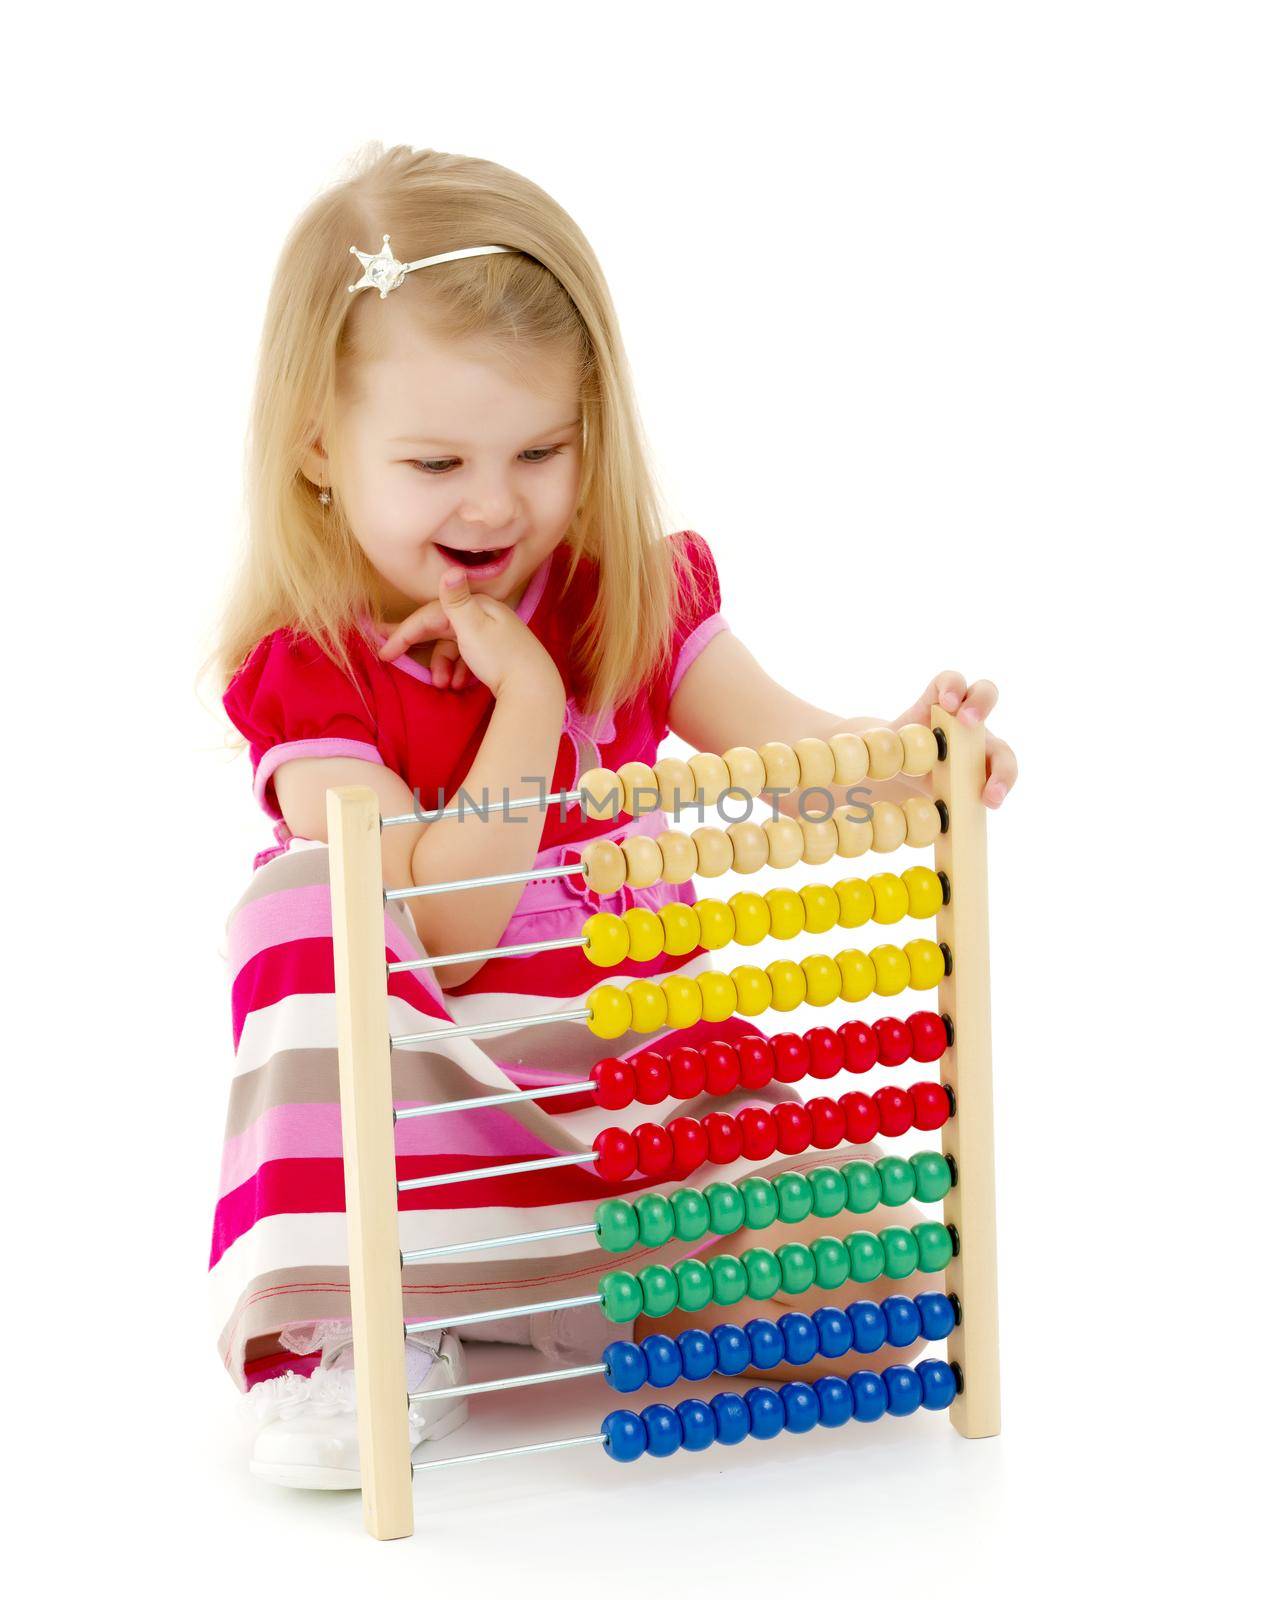 The girl counts on abacus by kolesnikov_studio